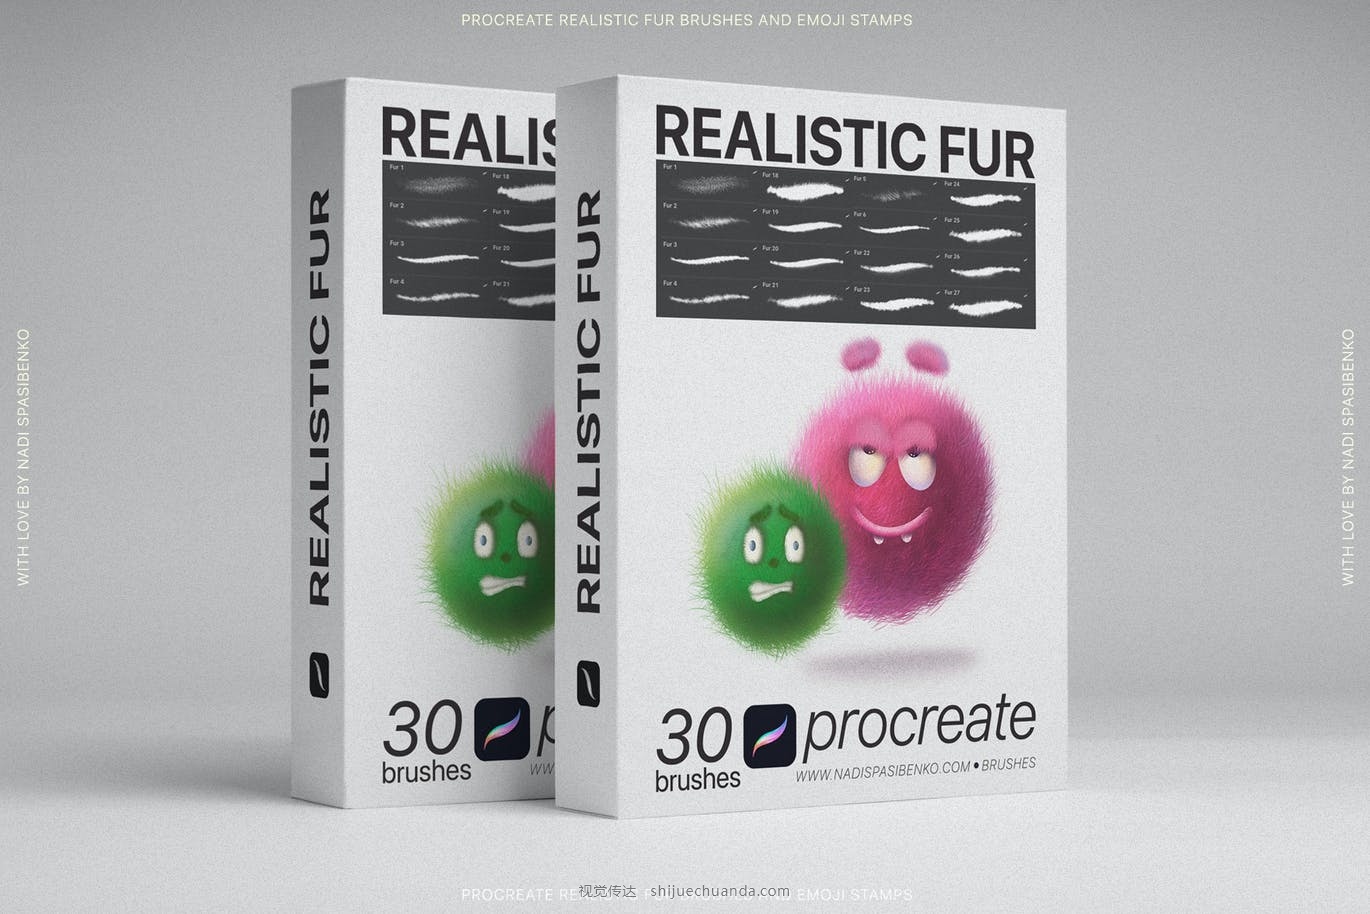 Procreate Realistic Fur & Emoji-8.jpg